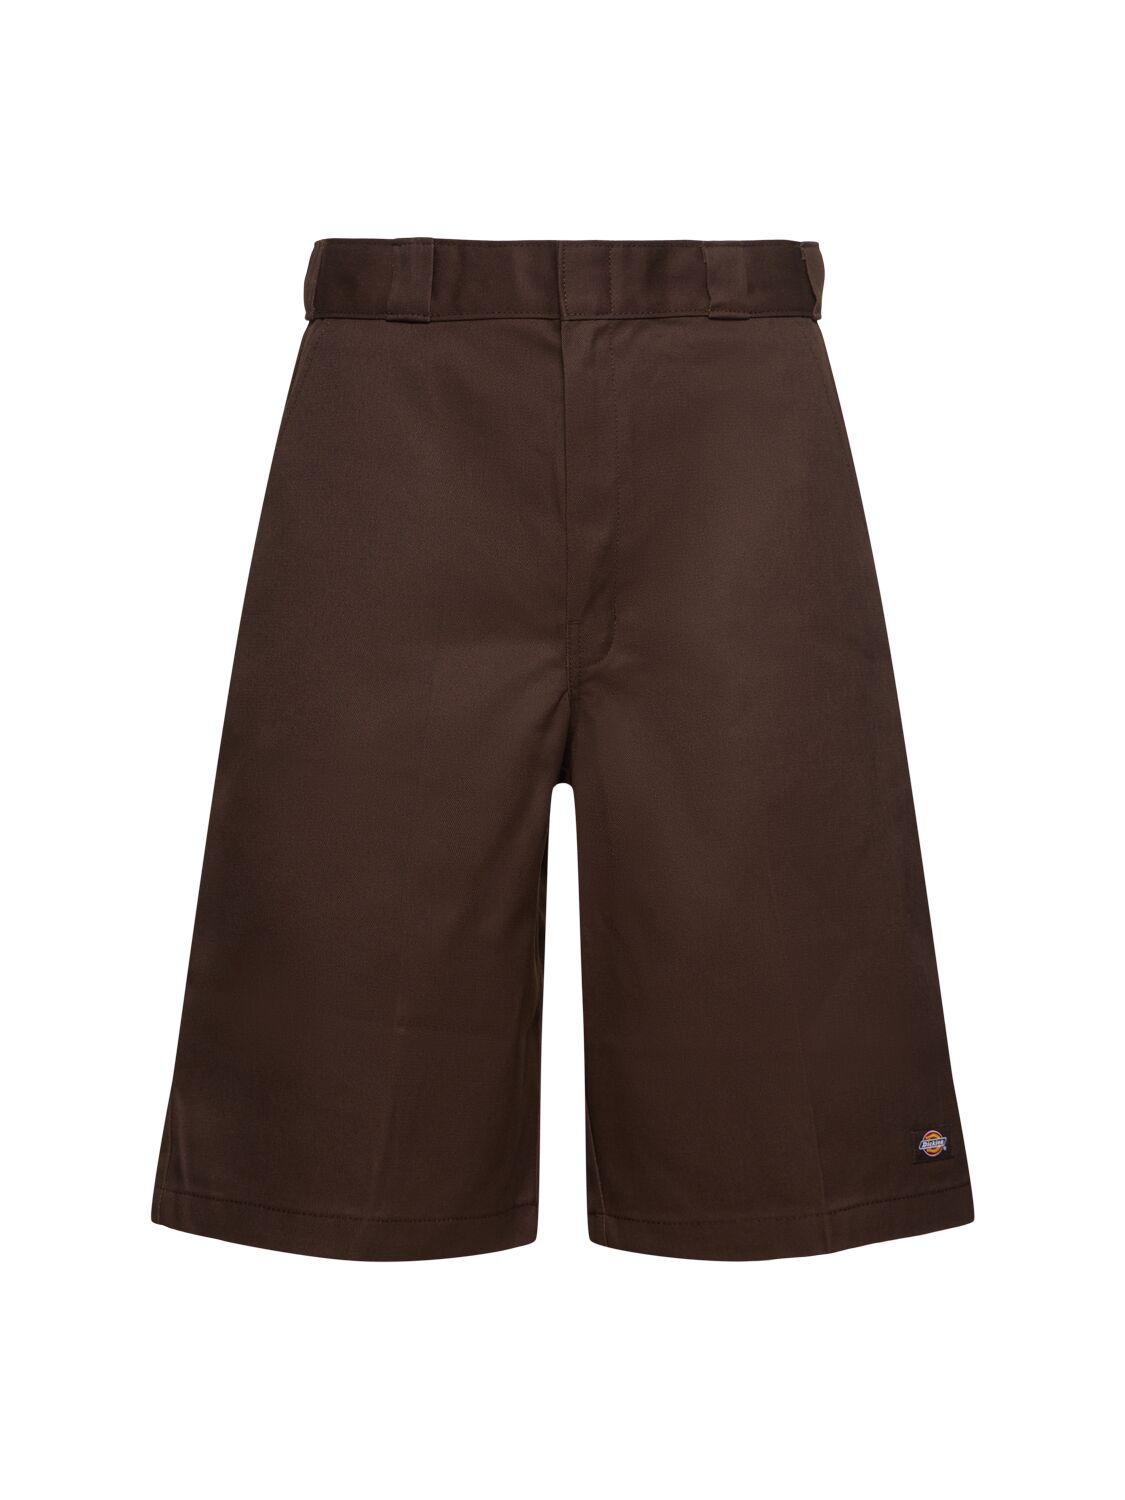 13" Multi-pocket Cotton Blend Shorts